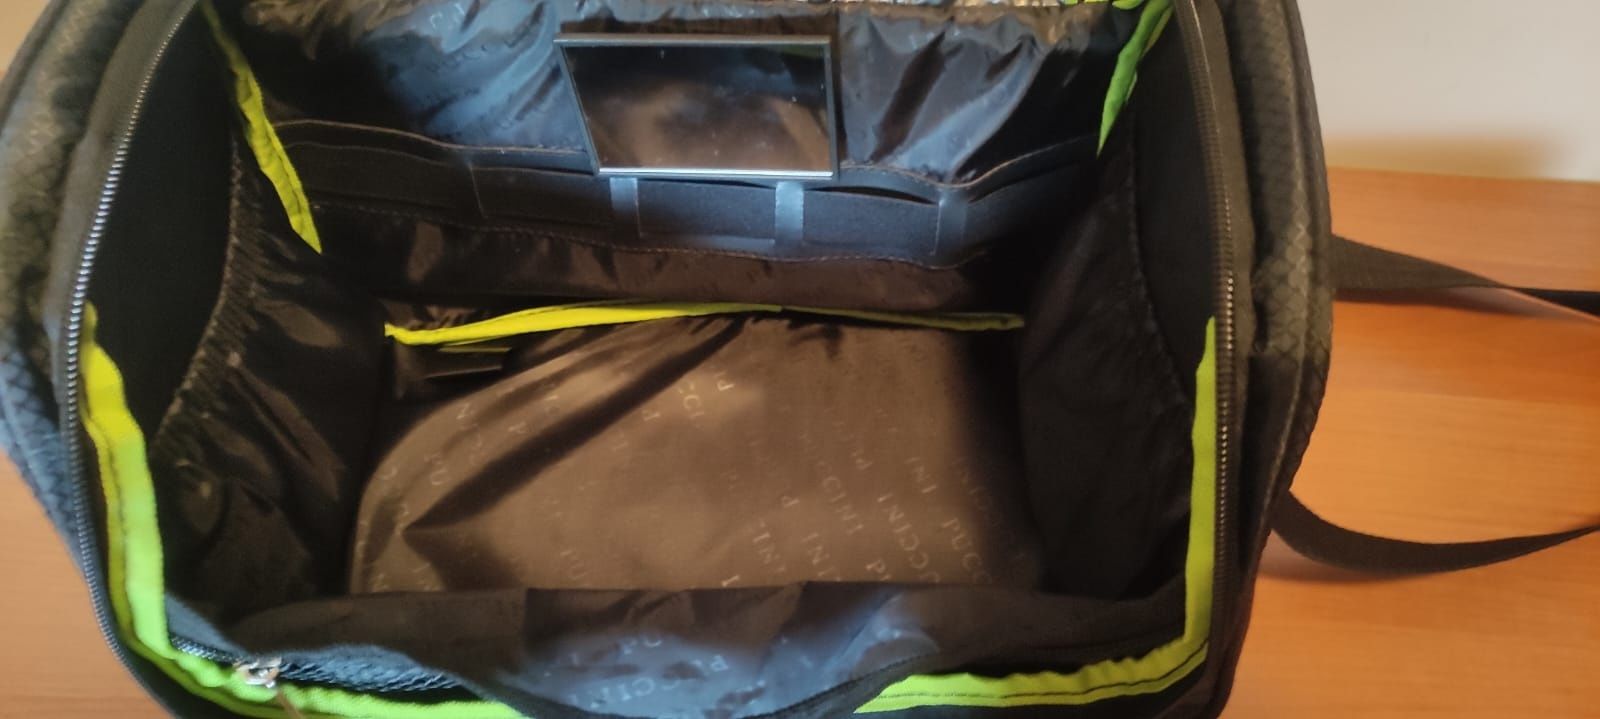 Nowa torba kuferek podróżny puccini QM80451